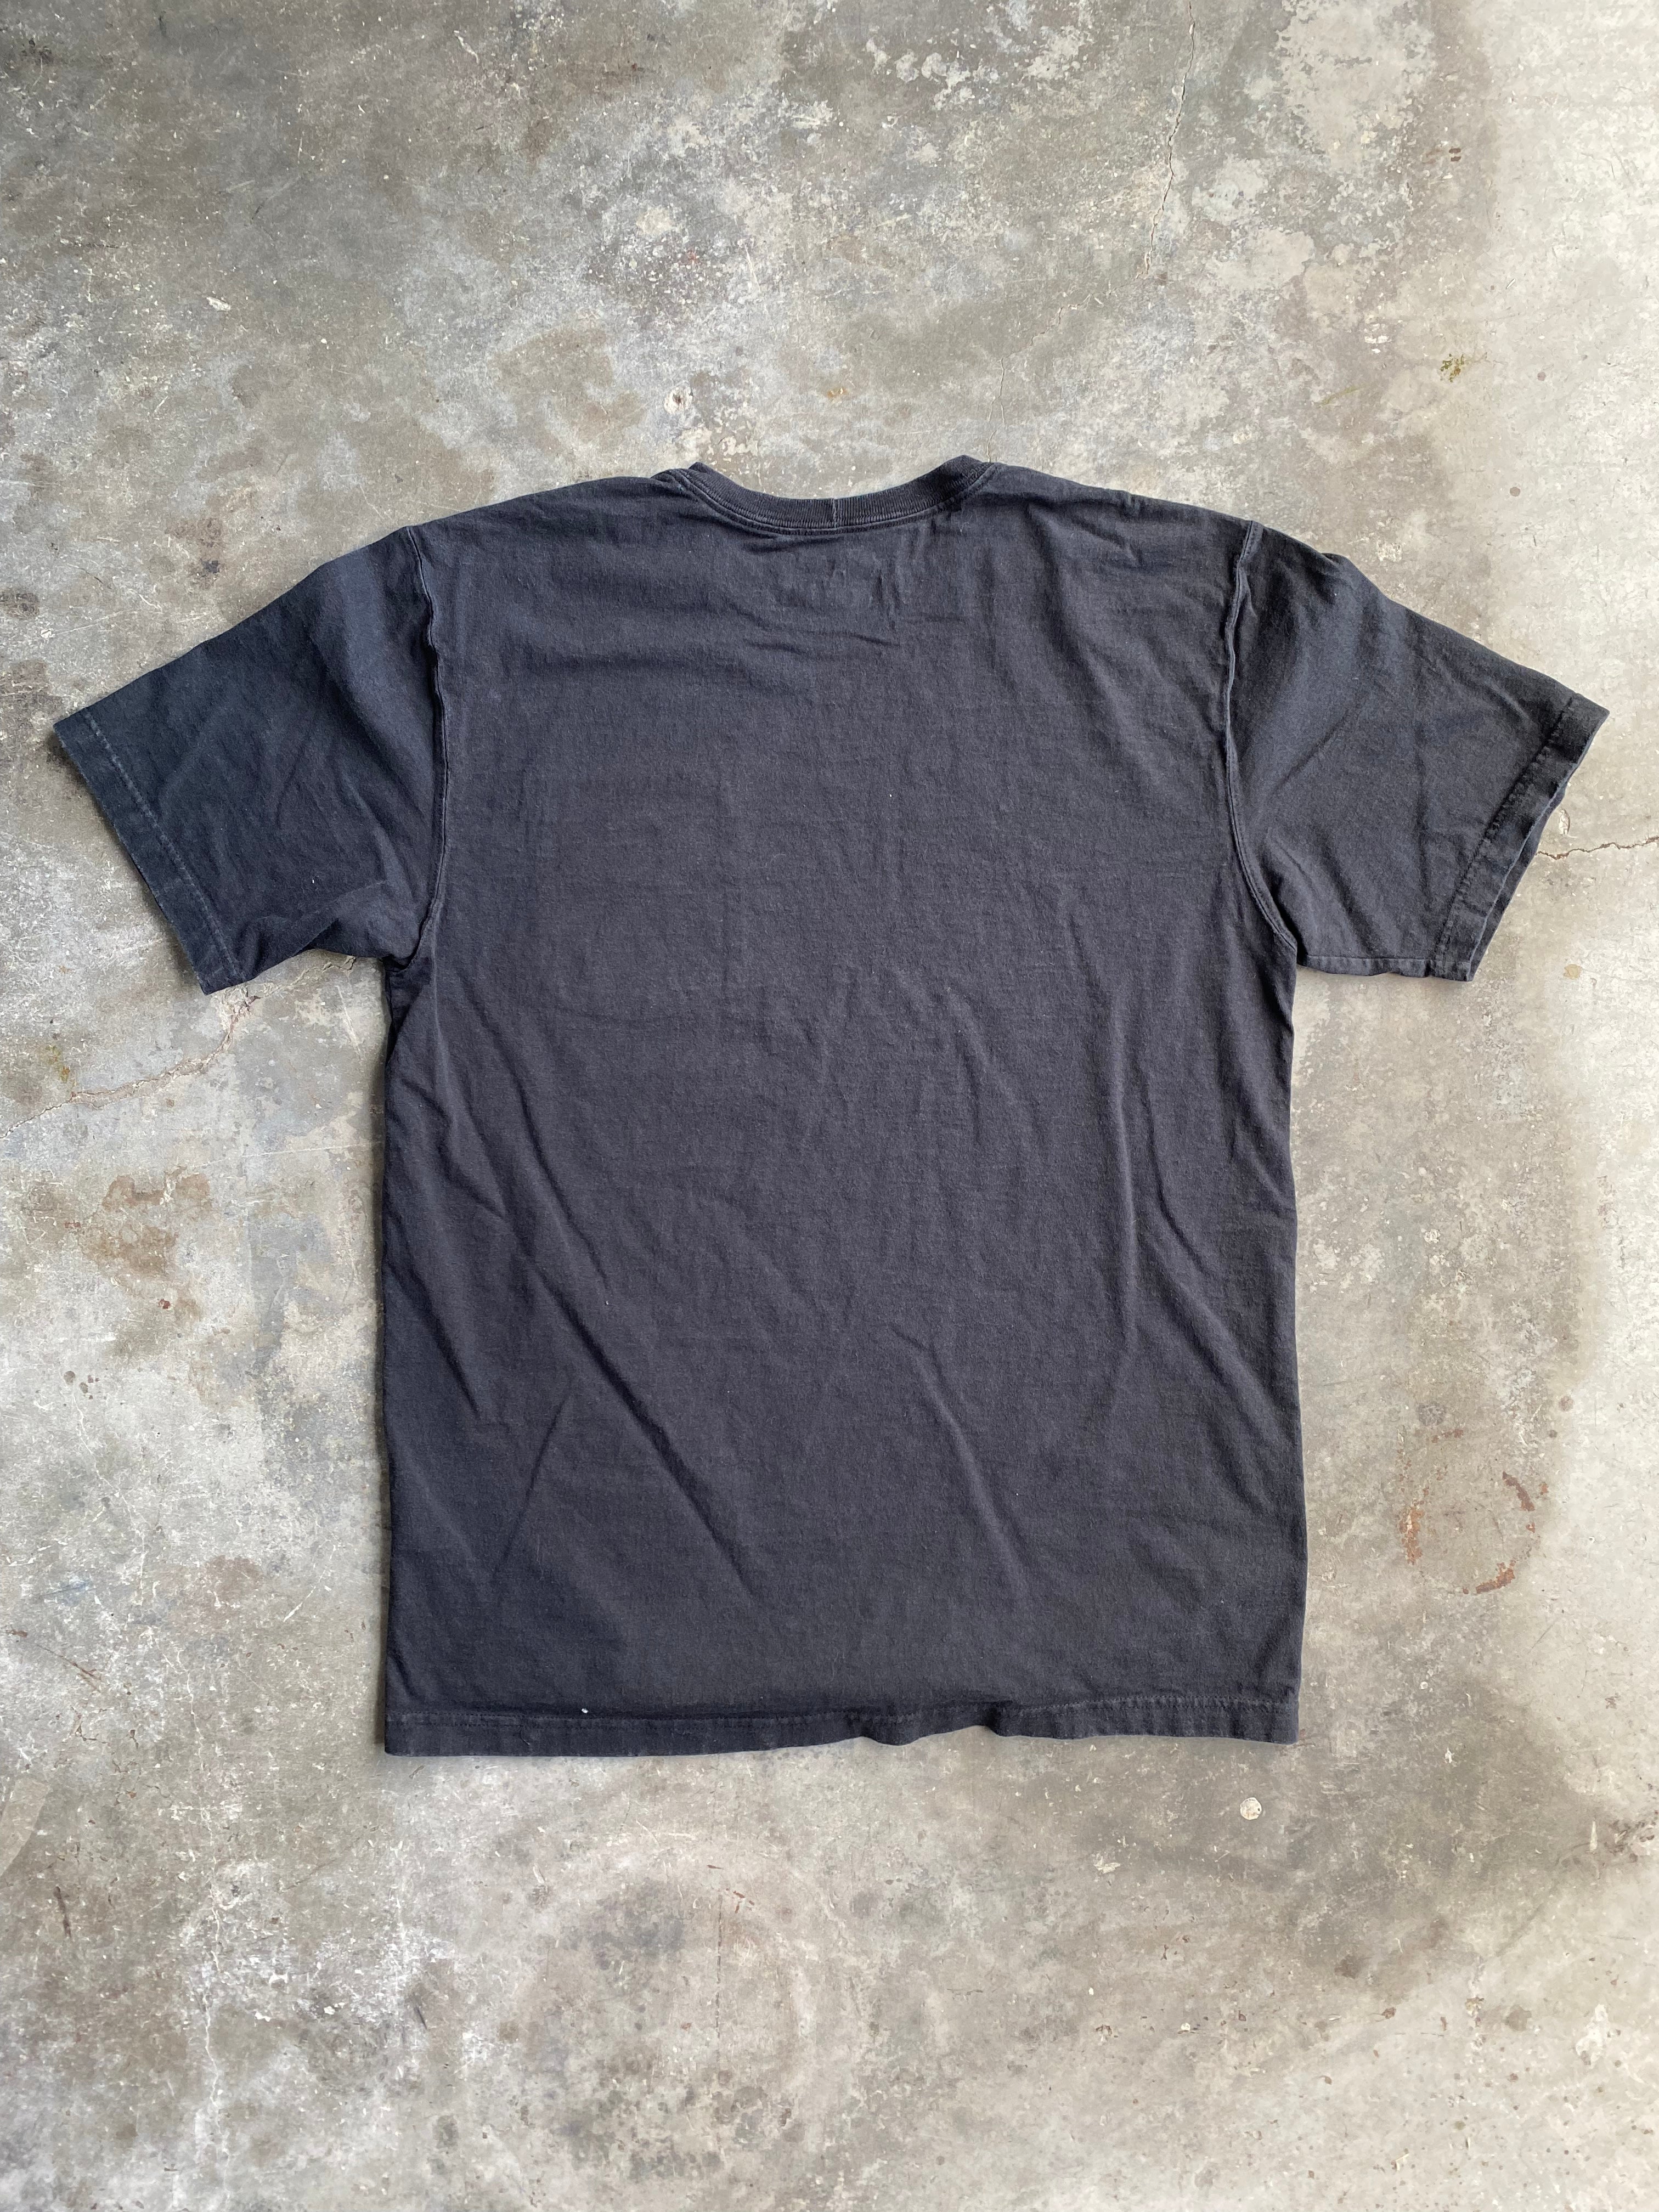 Vintage Carhartt T-Shirt - M